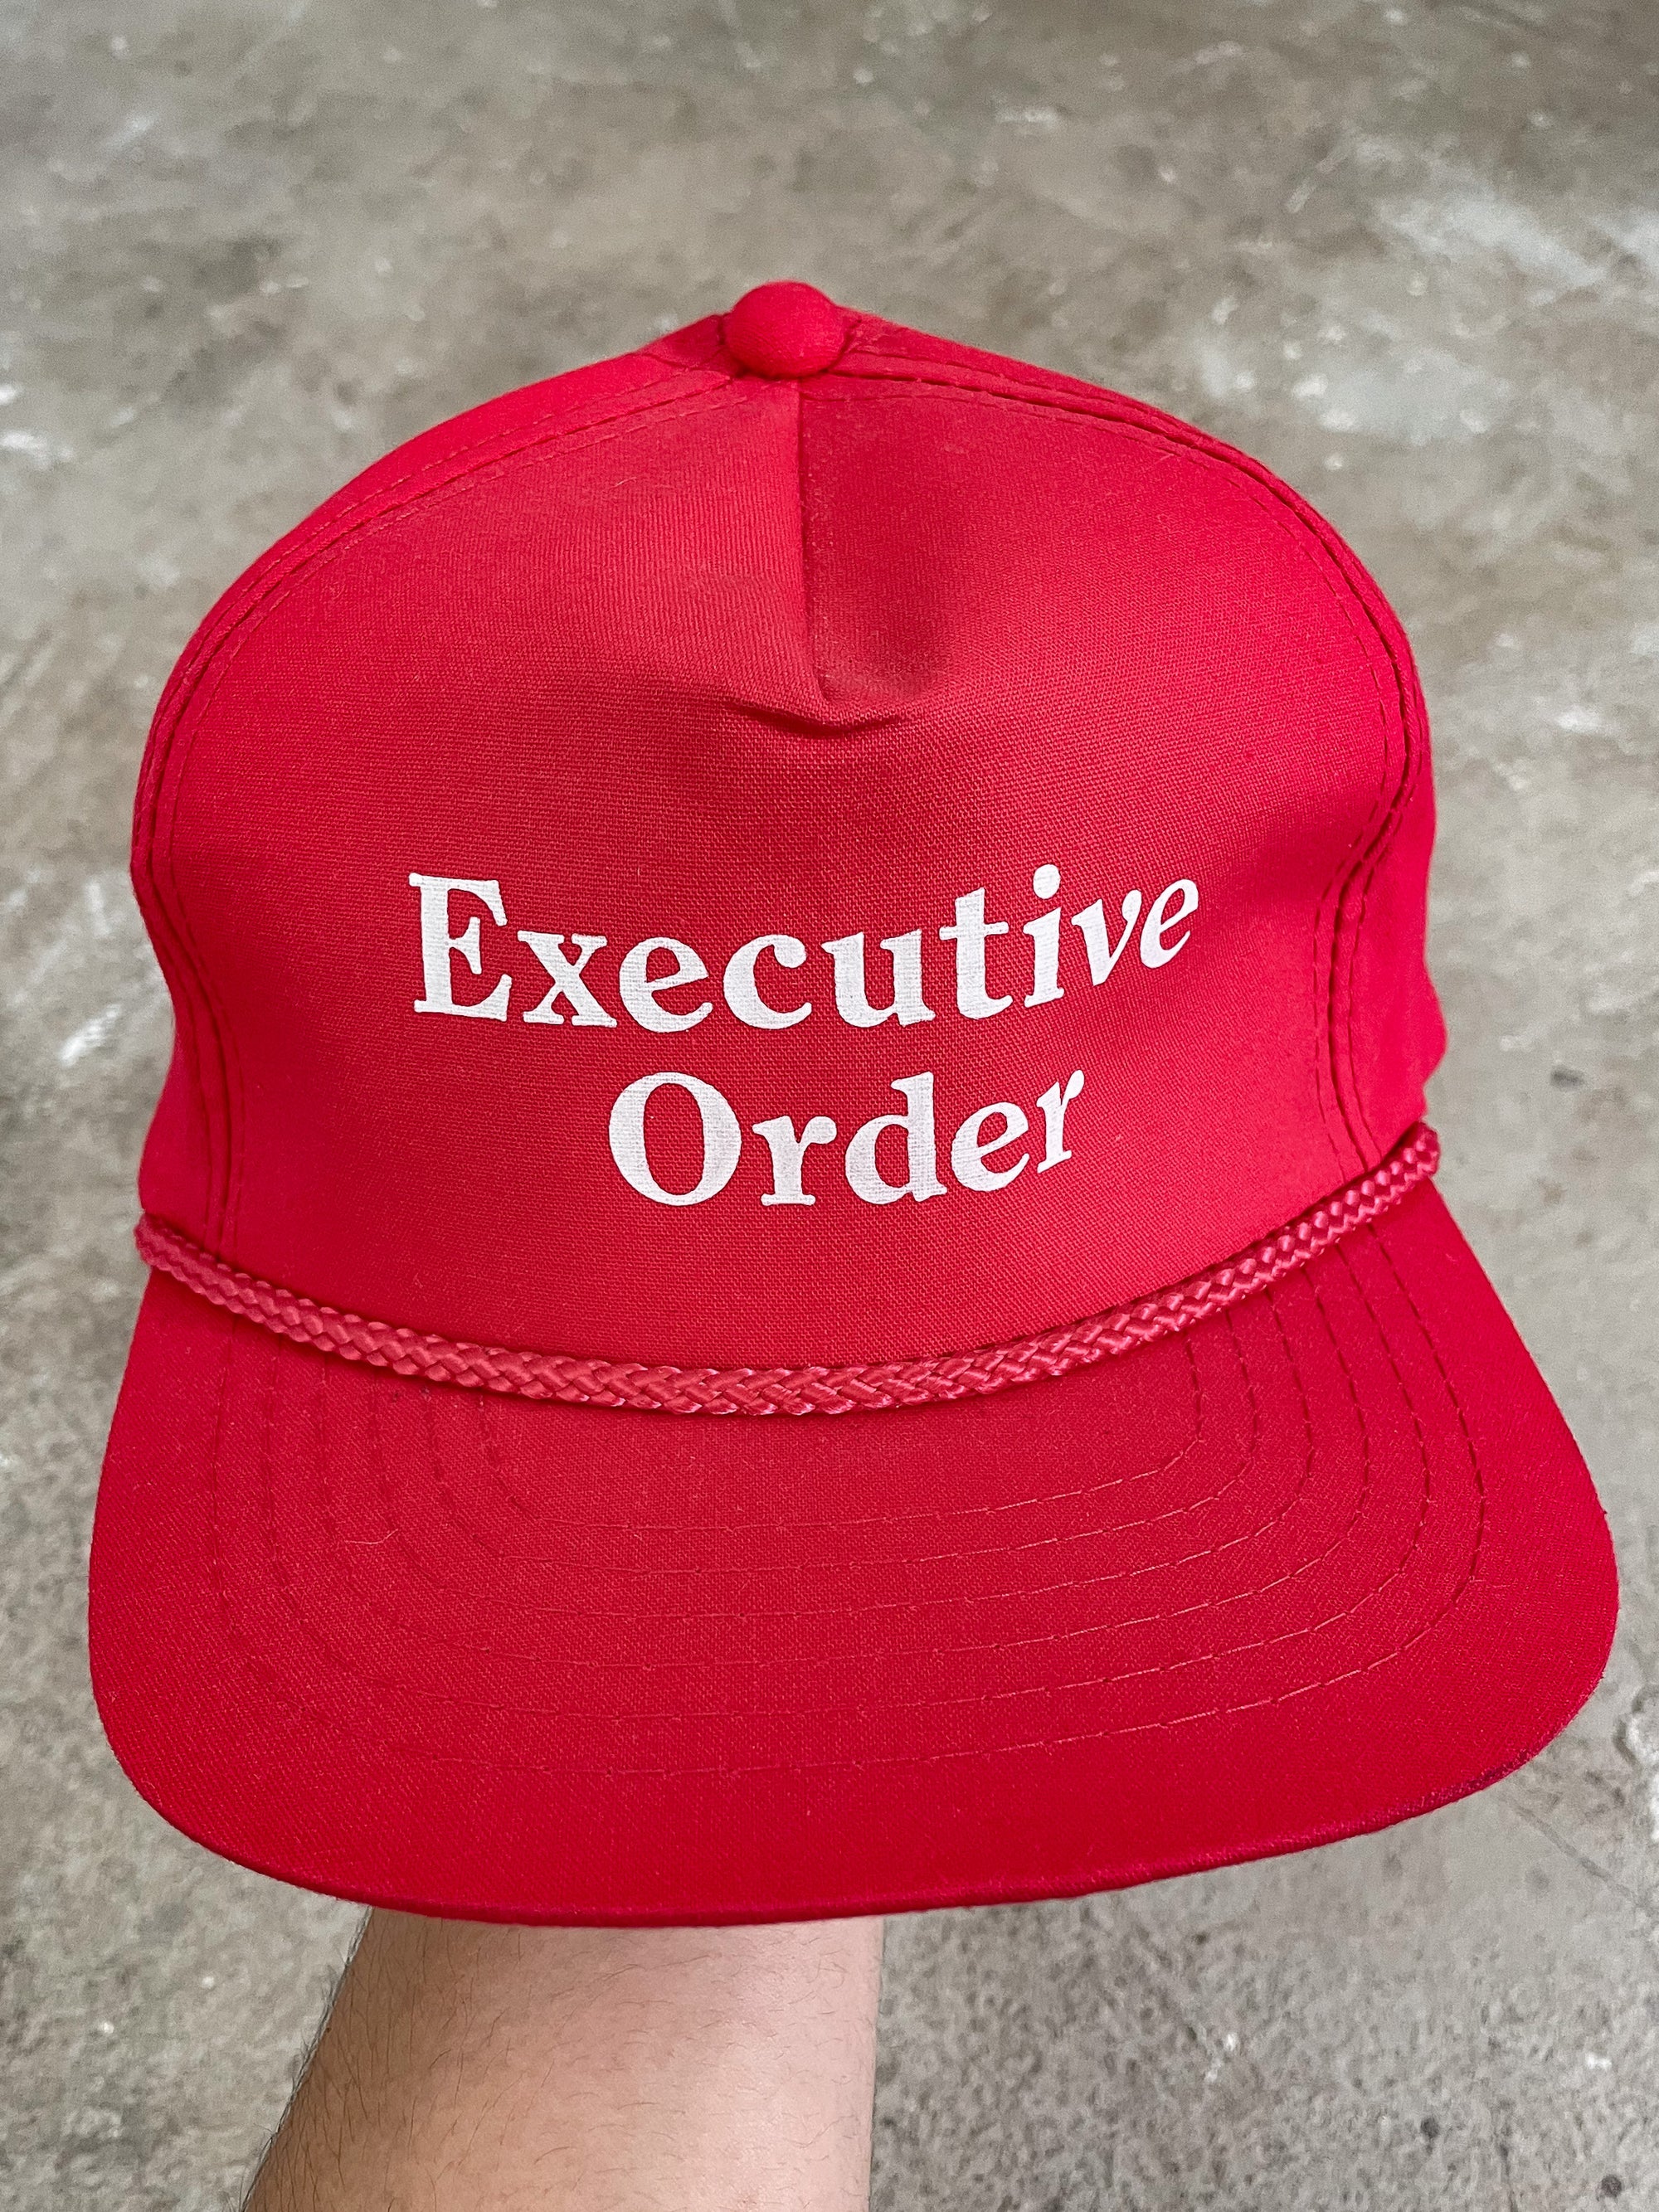 1990s “Executive Order” Trucker Hat